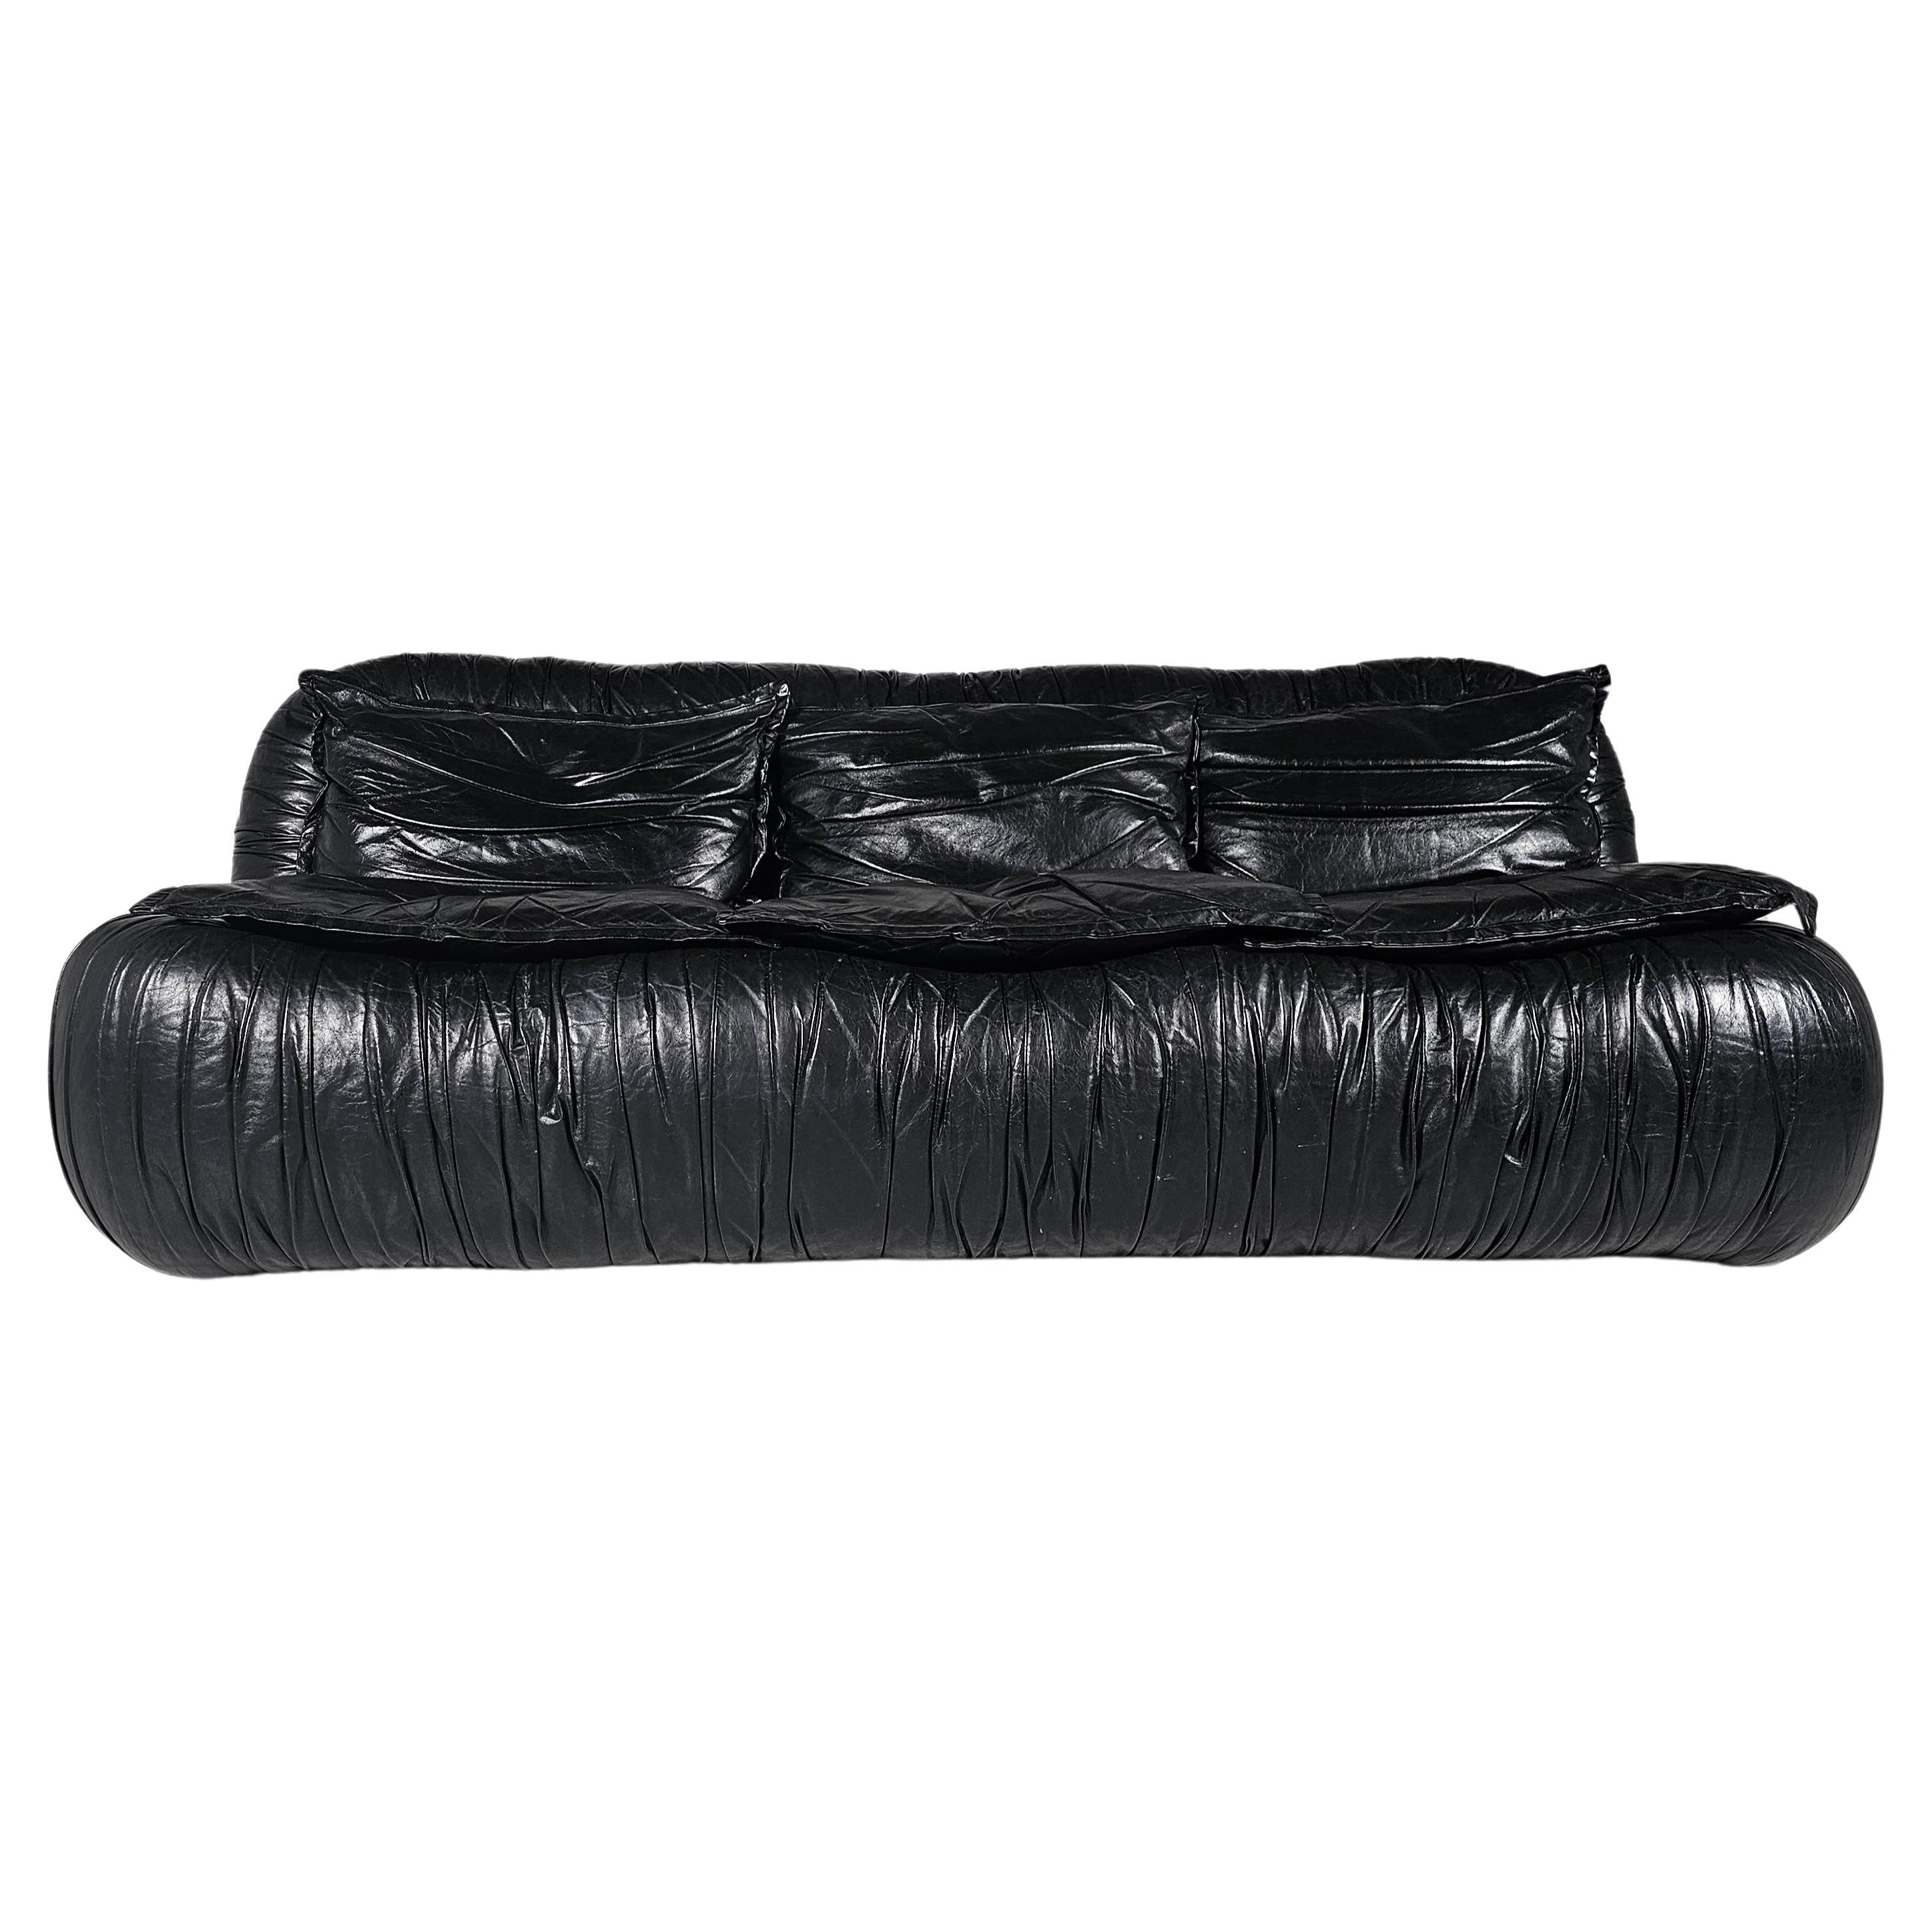 Black leather sofa by De Pas, d'Urbino and Lomazzi for Dall'Oca, 1970s For Sale